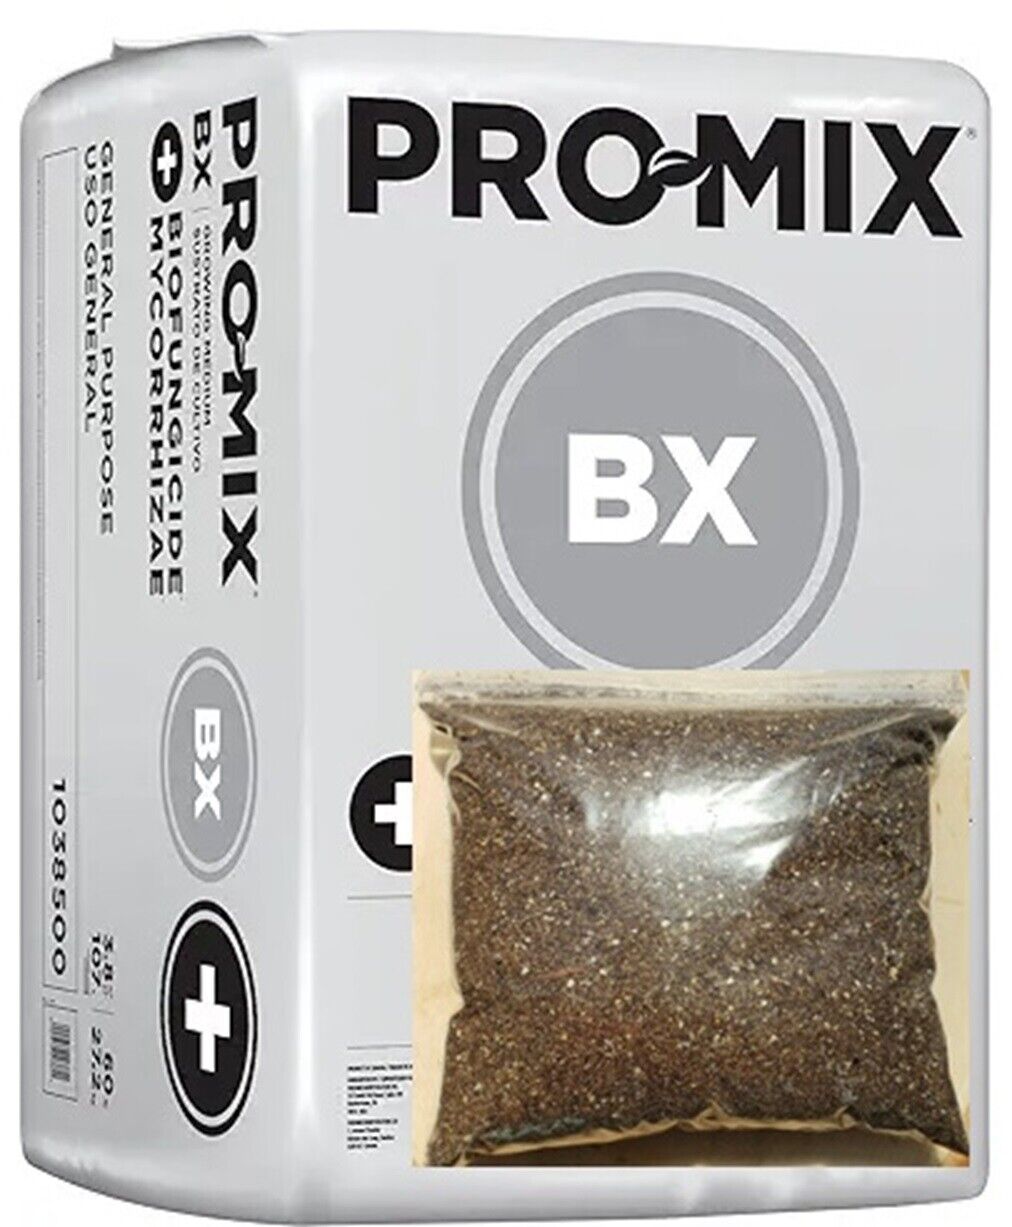 Pro-Mix BX Potting Mix Seed Germination Soilless Growing Media Mycorrhizae FAST